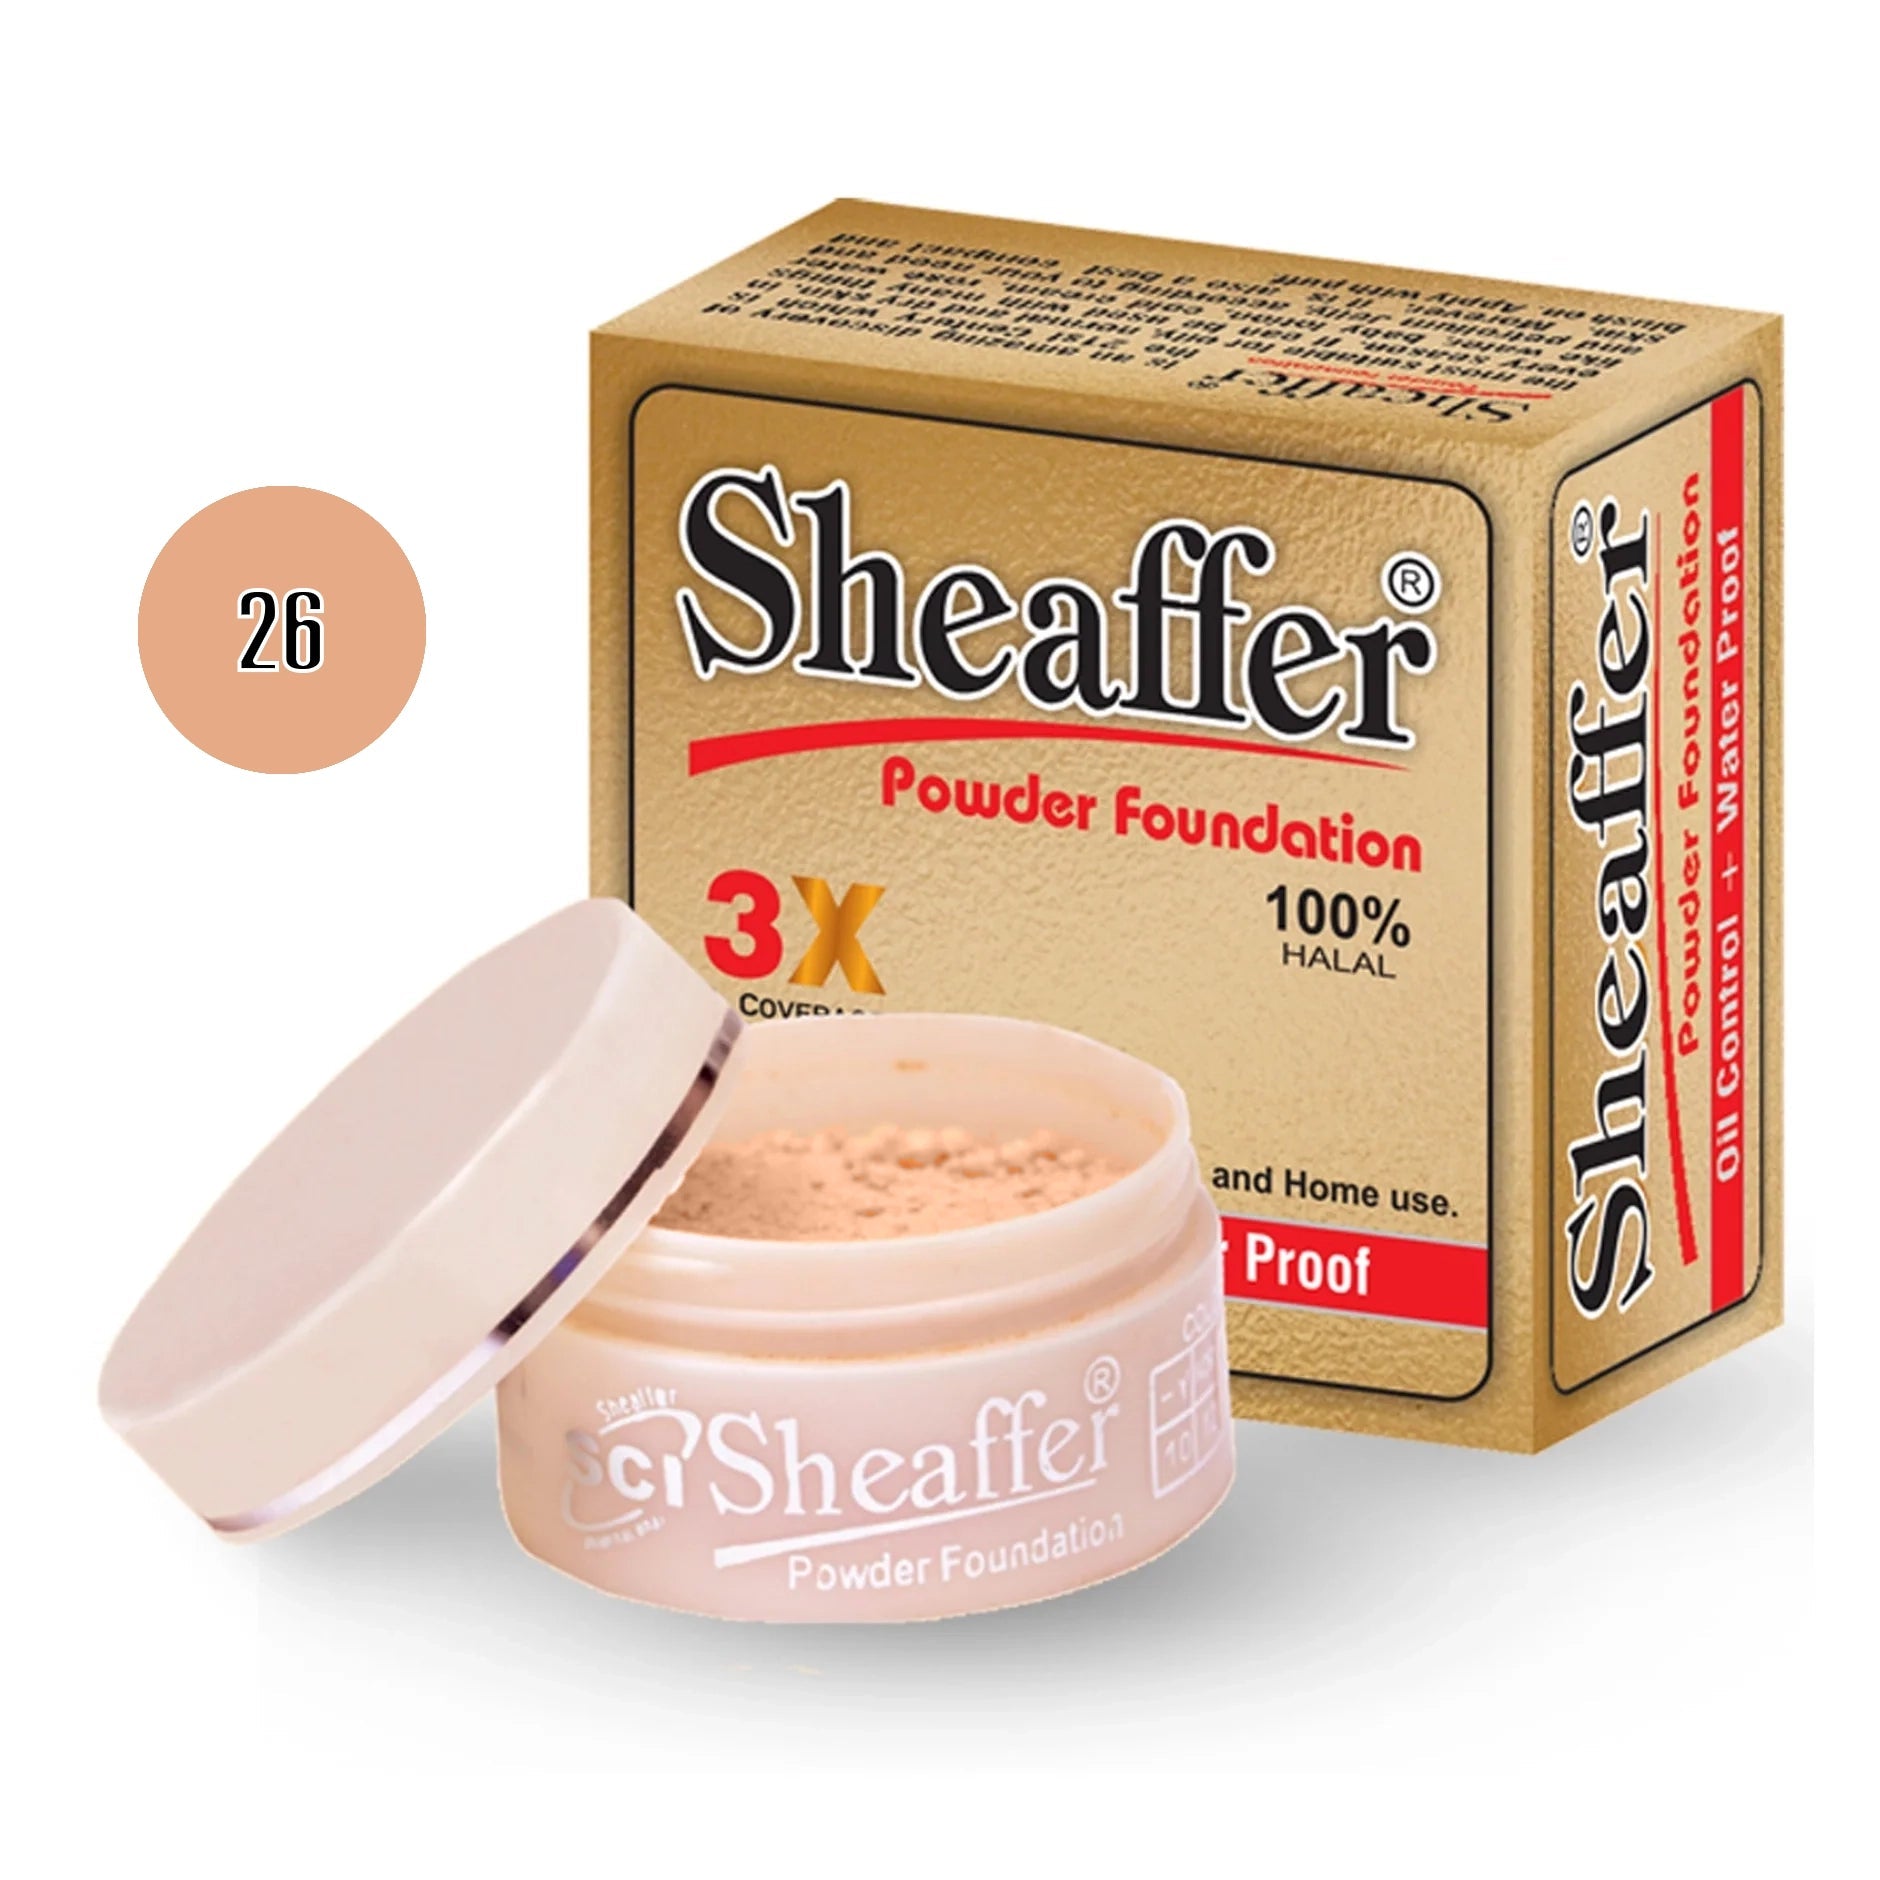 Sheaffer Powder Foundation Base 00 Shade - Retailershop - Online Shopping Center